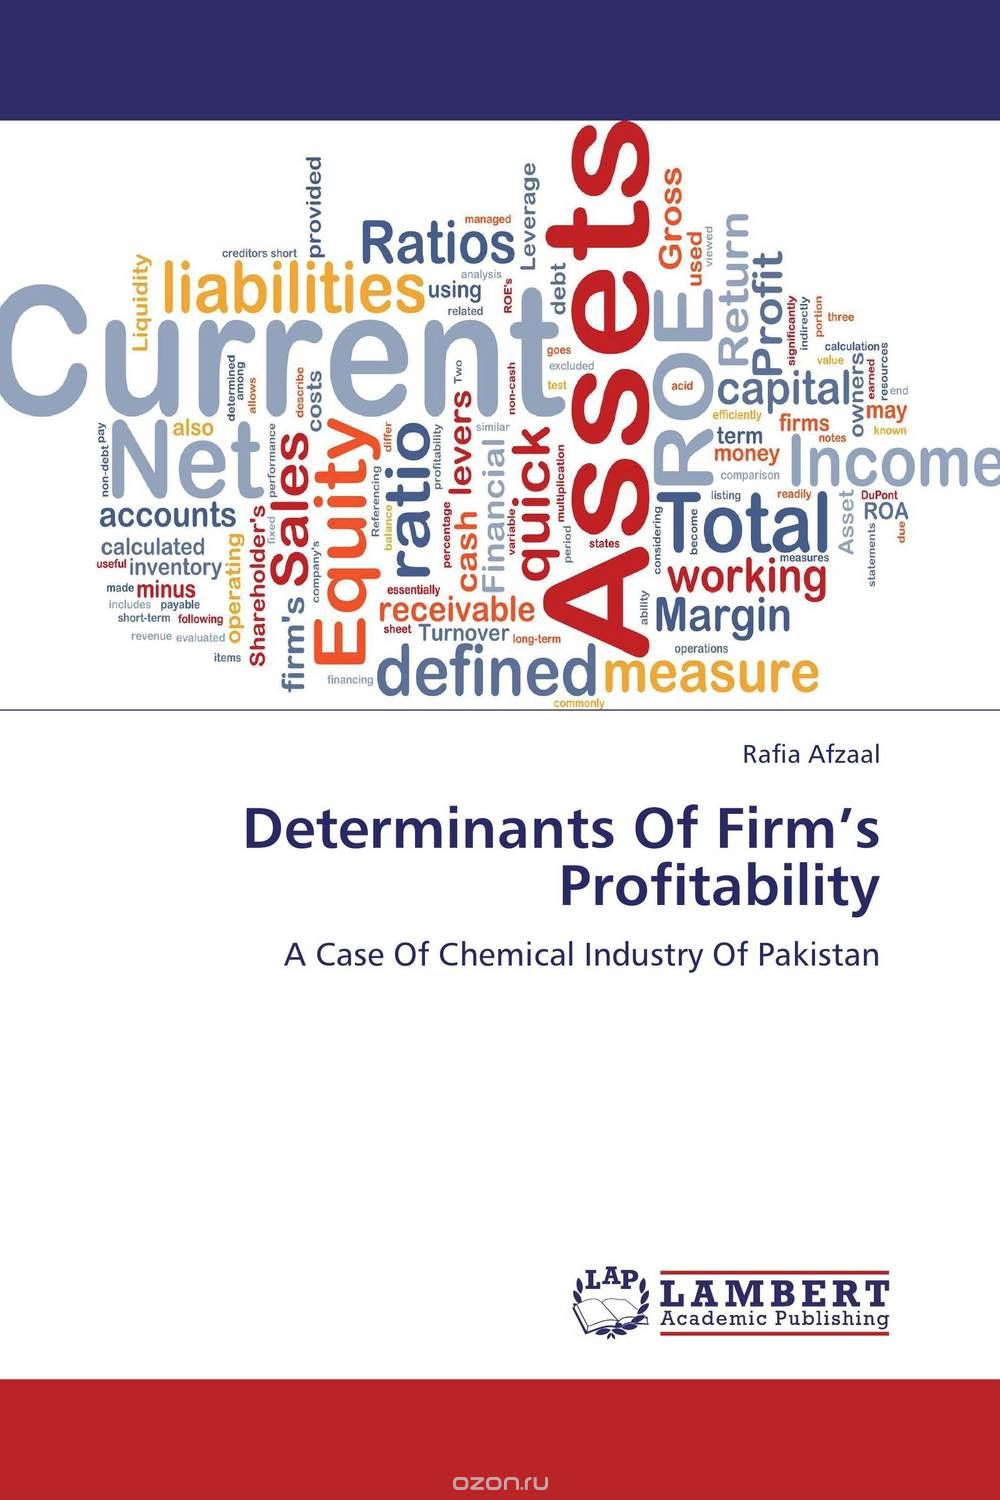 Determinants Of Firm’s Profitability